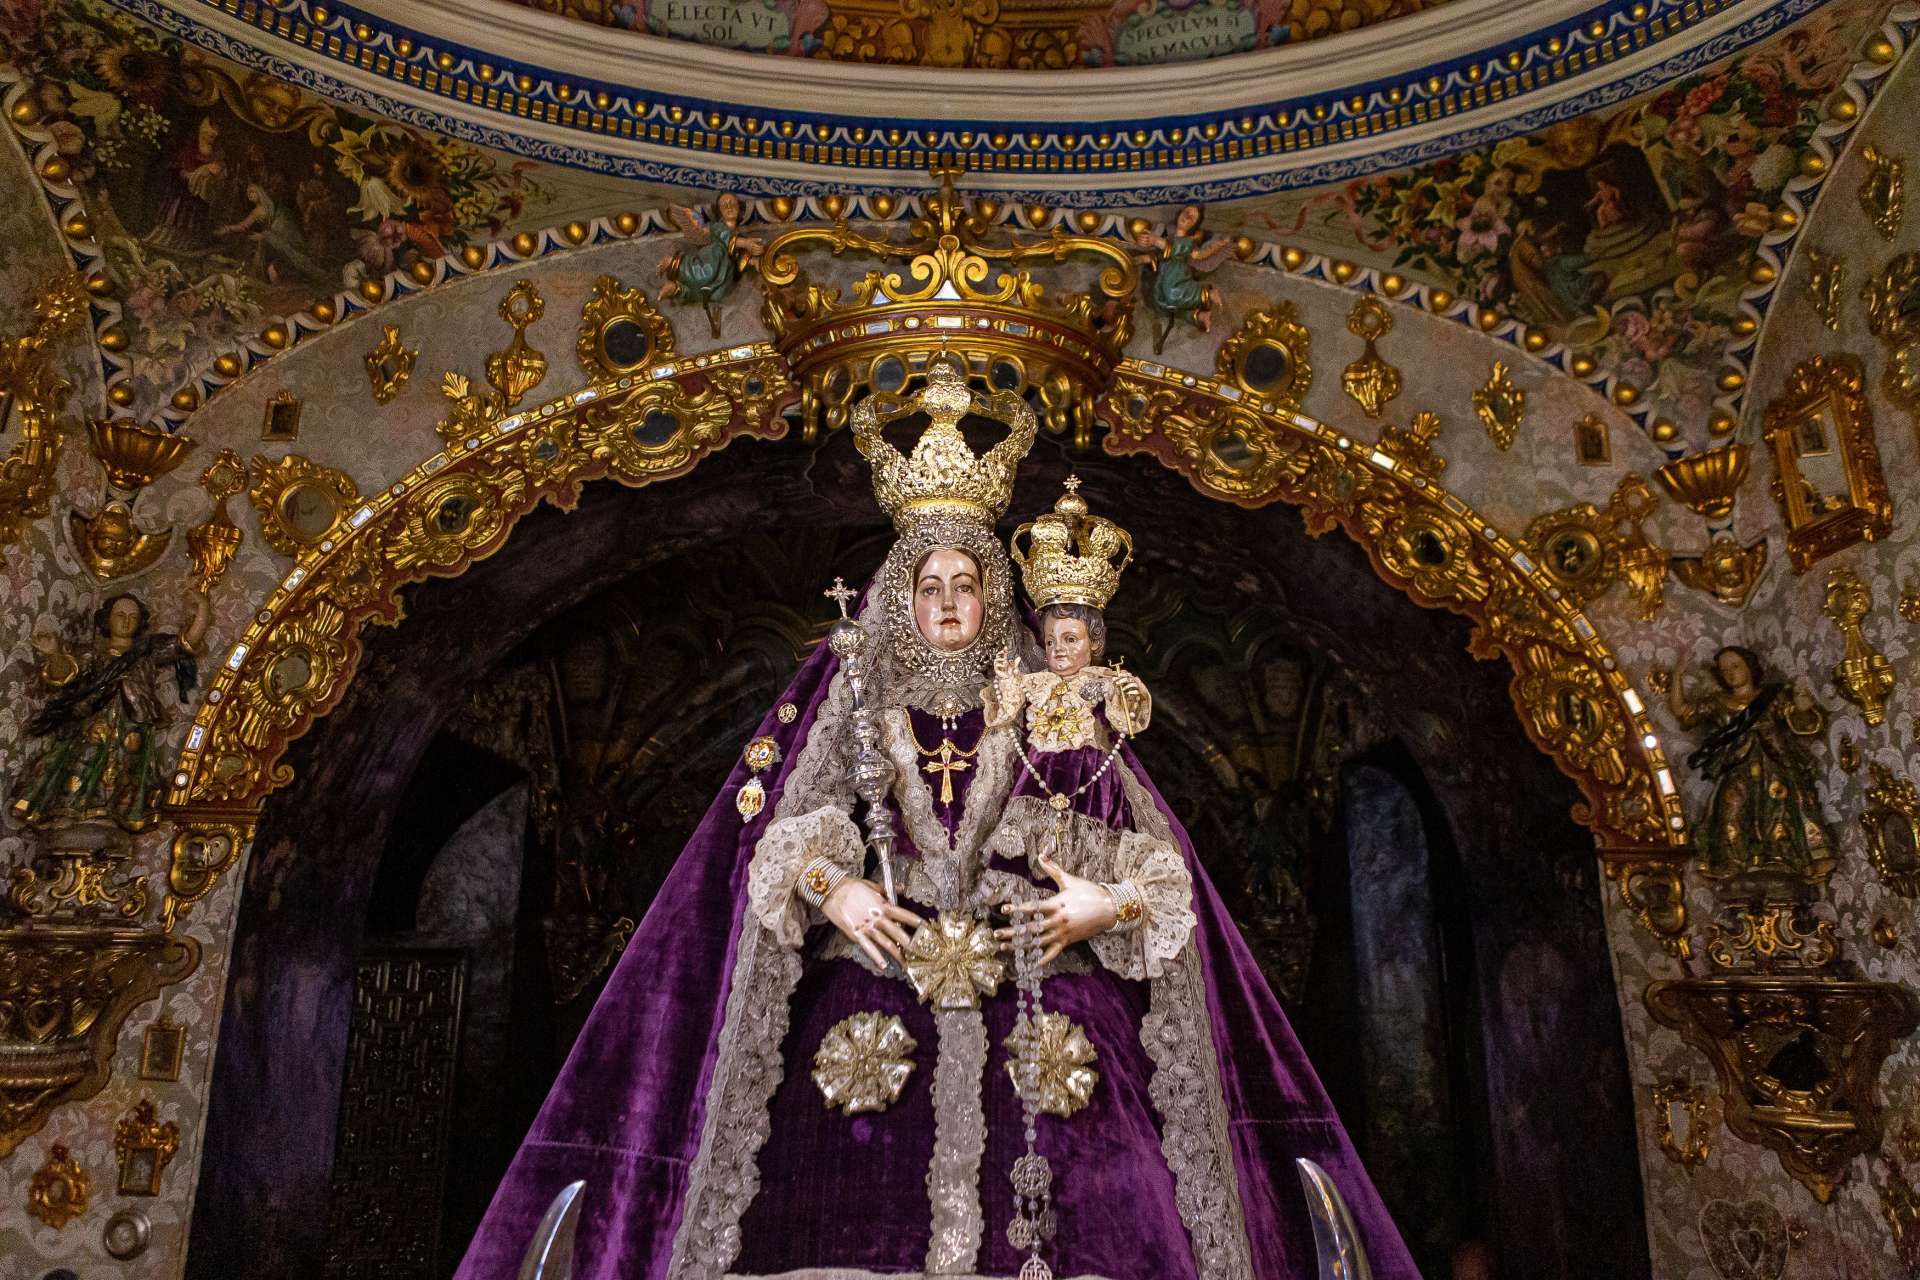 Royal Sanctuary of María Santísima de Araceli (the Blessed Virgin of Araceli)